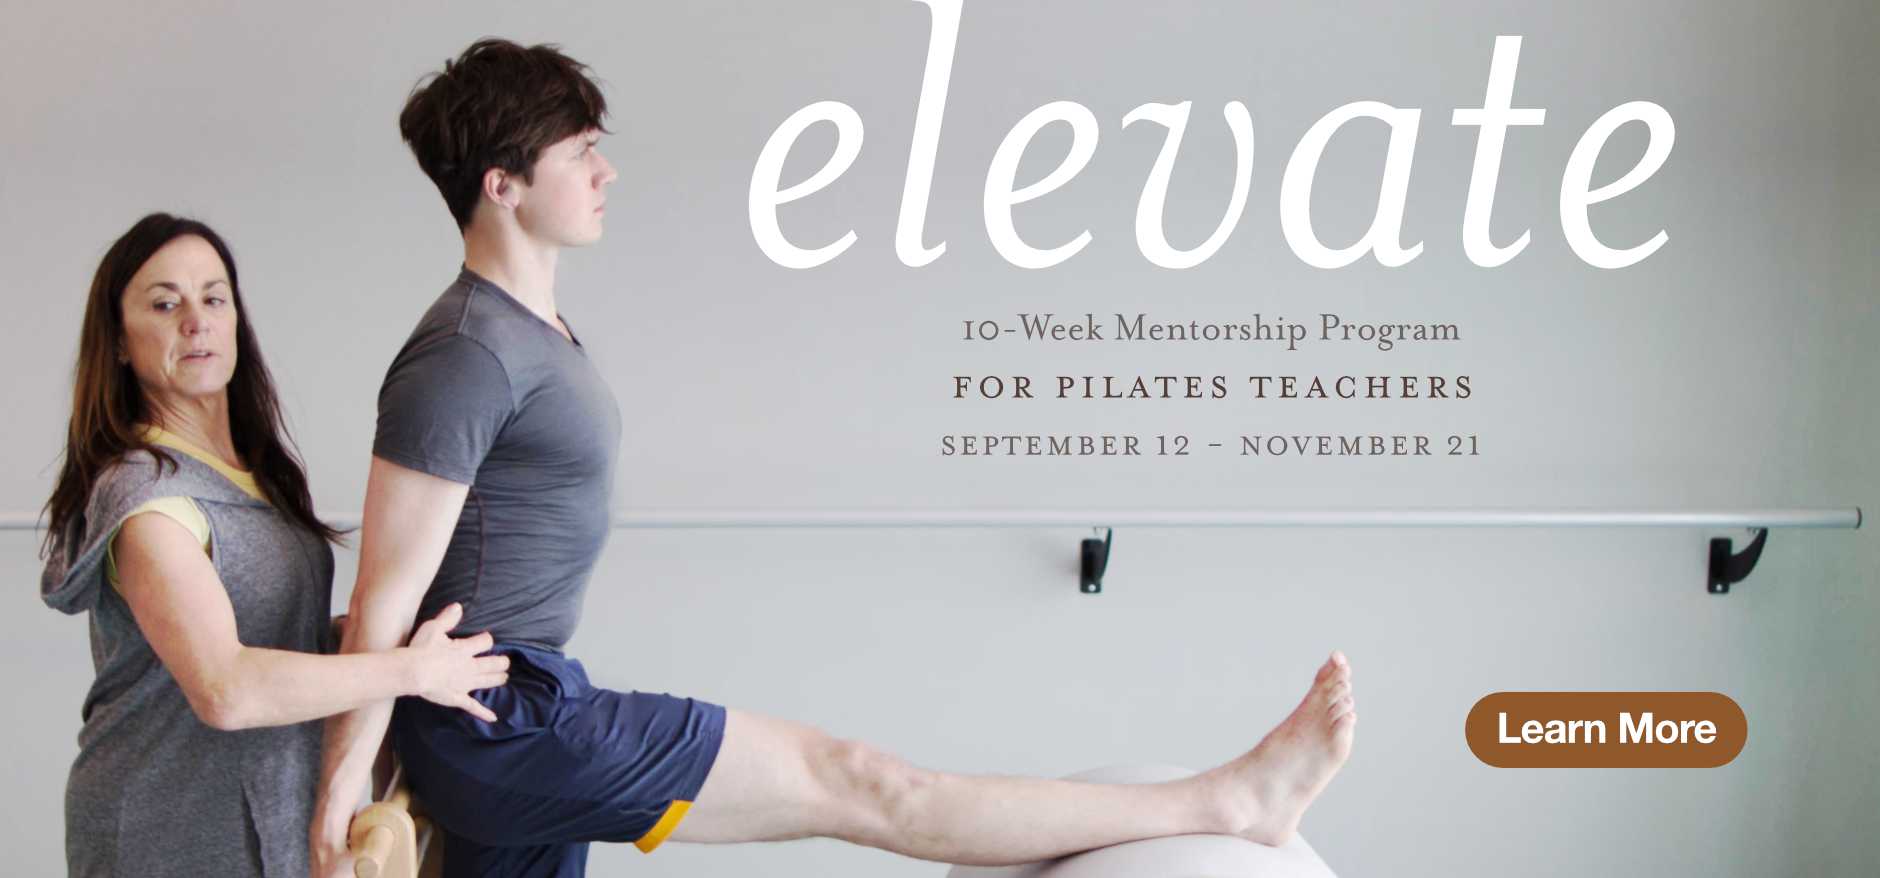 Elevate is a 10-week mentorship program for Pilates teachers, running 10/4 - 12/13